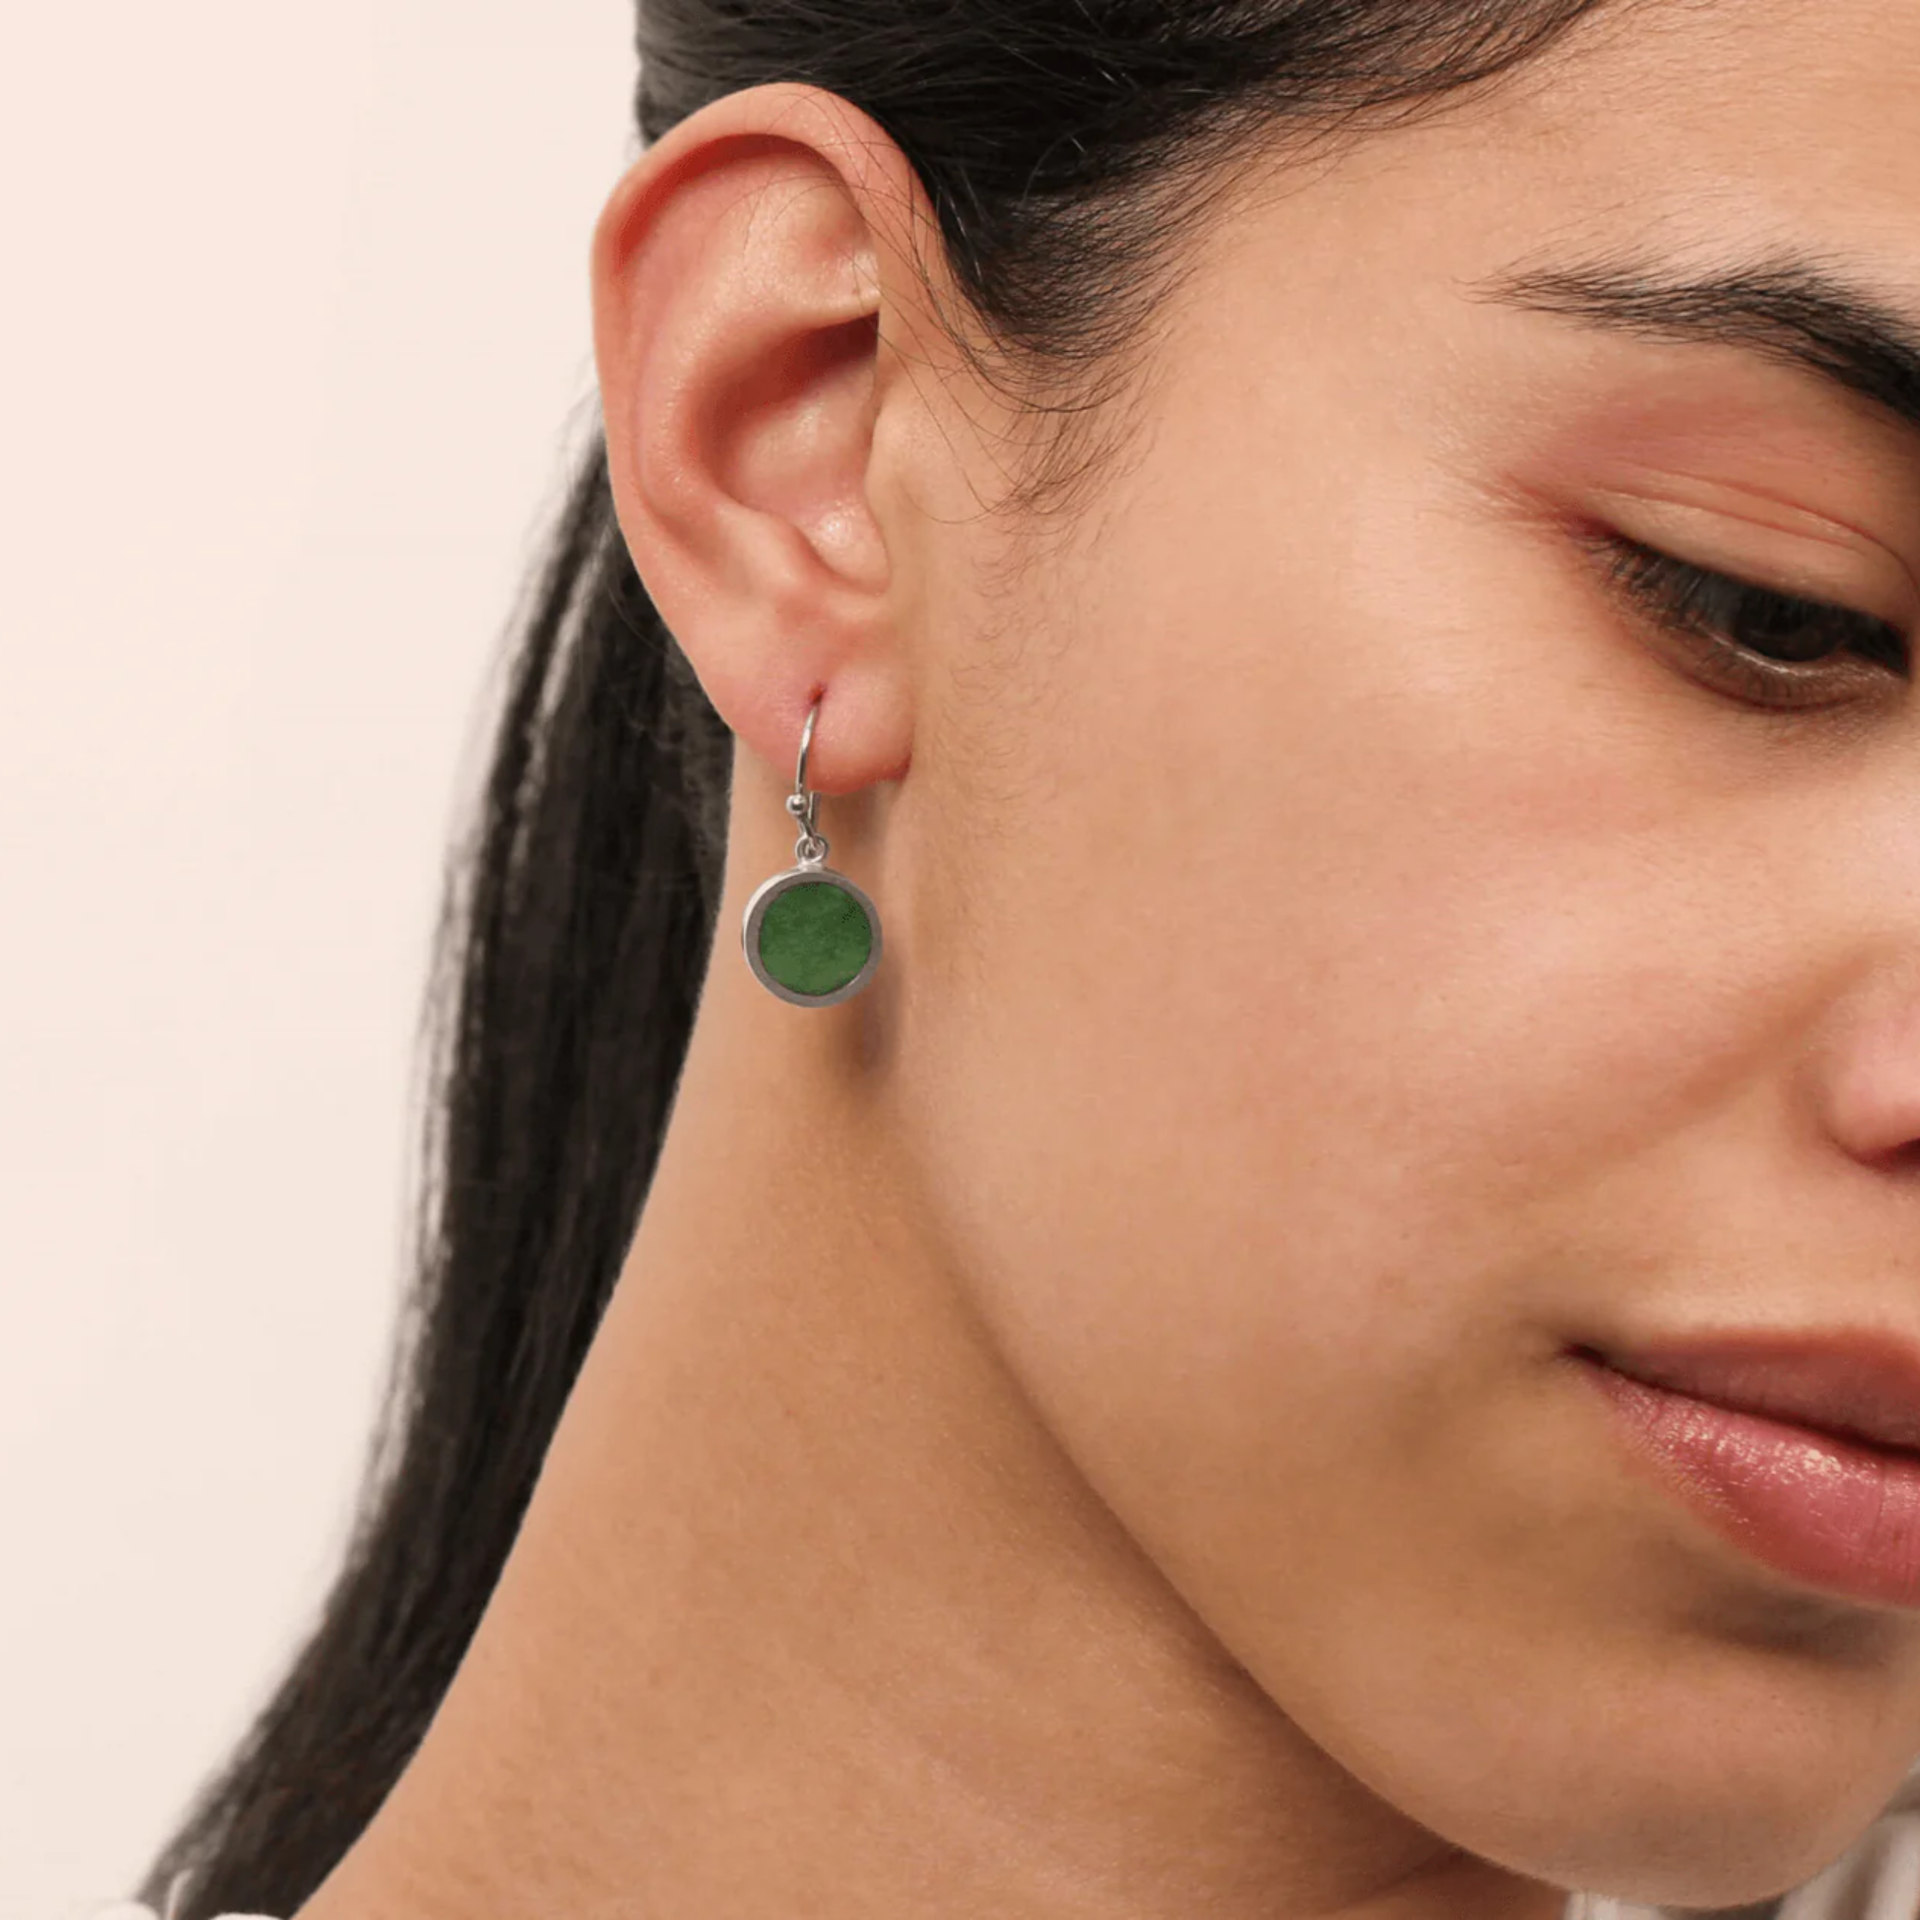 New Zealand Greenstone Small Round Drop Earrings on model